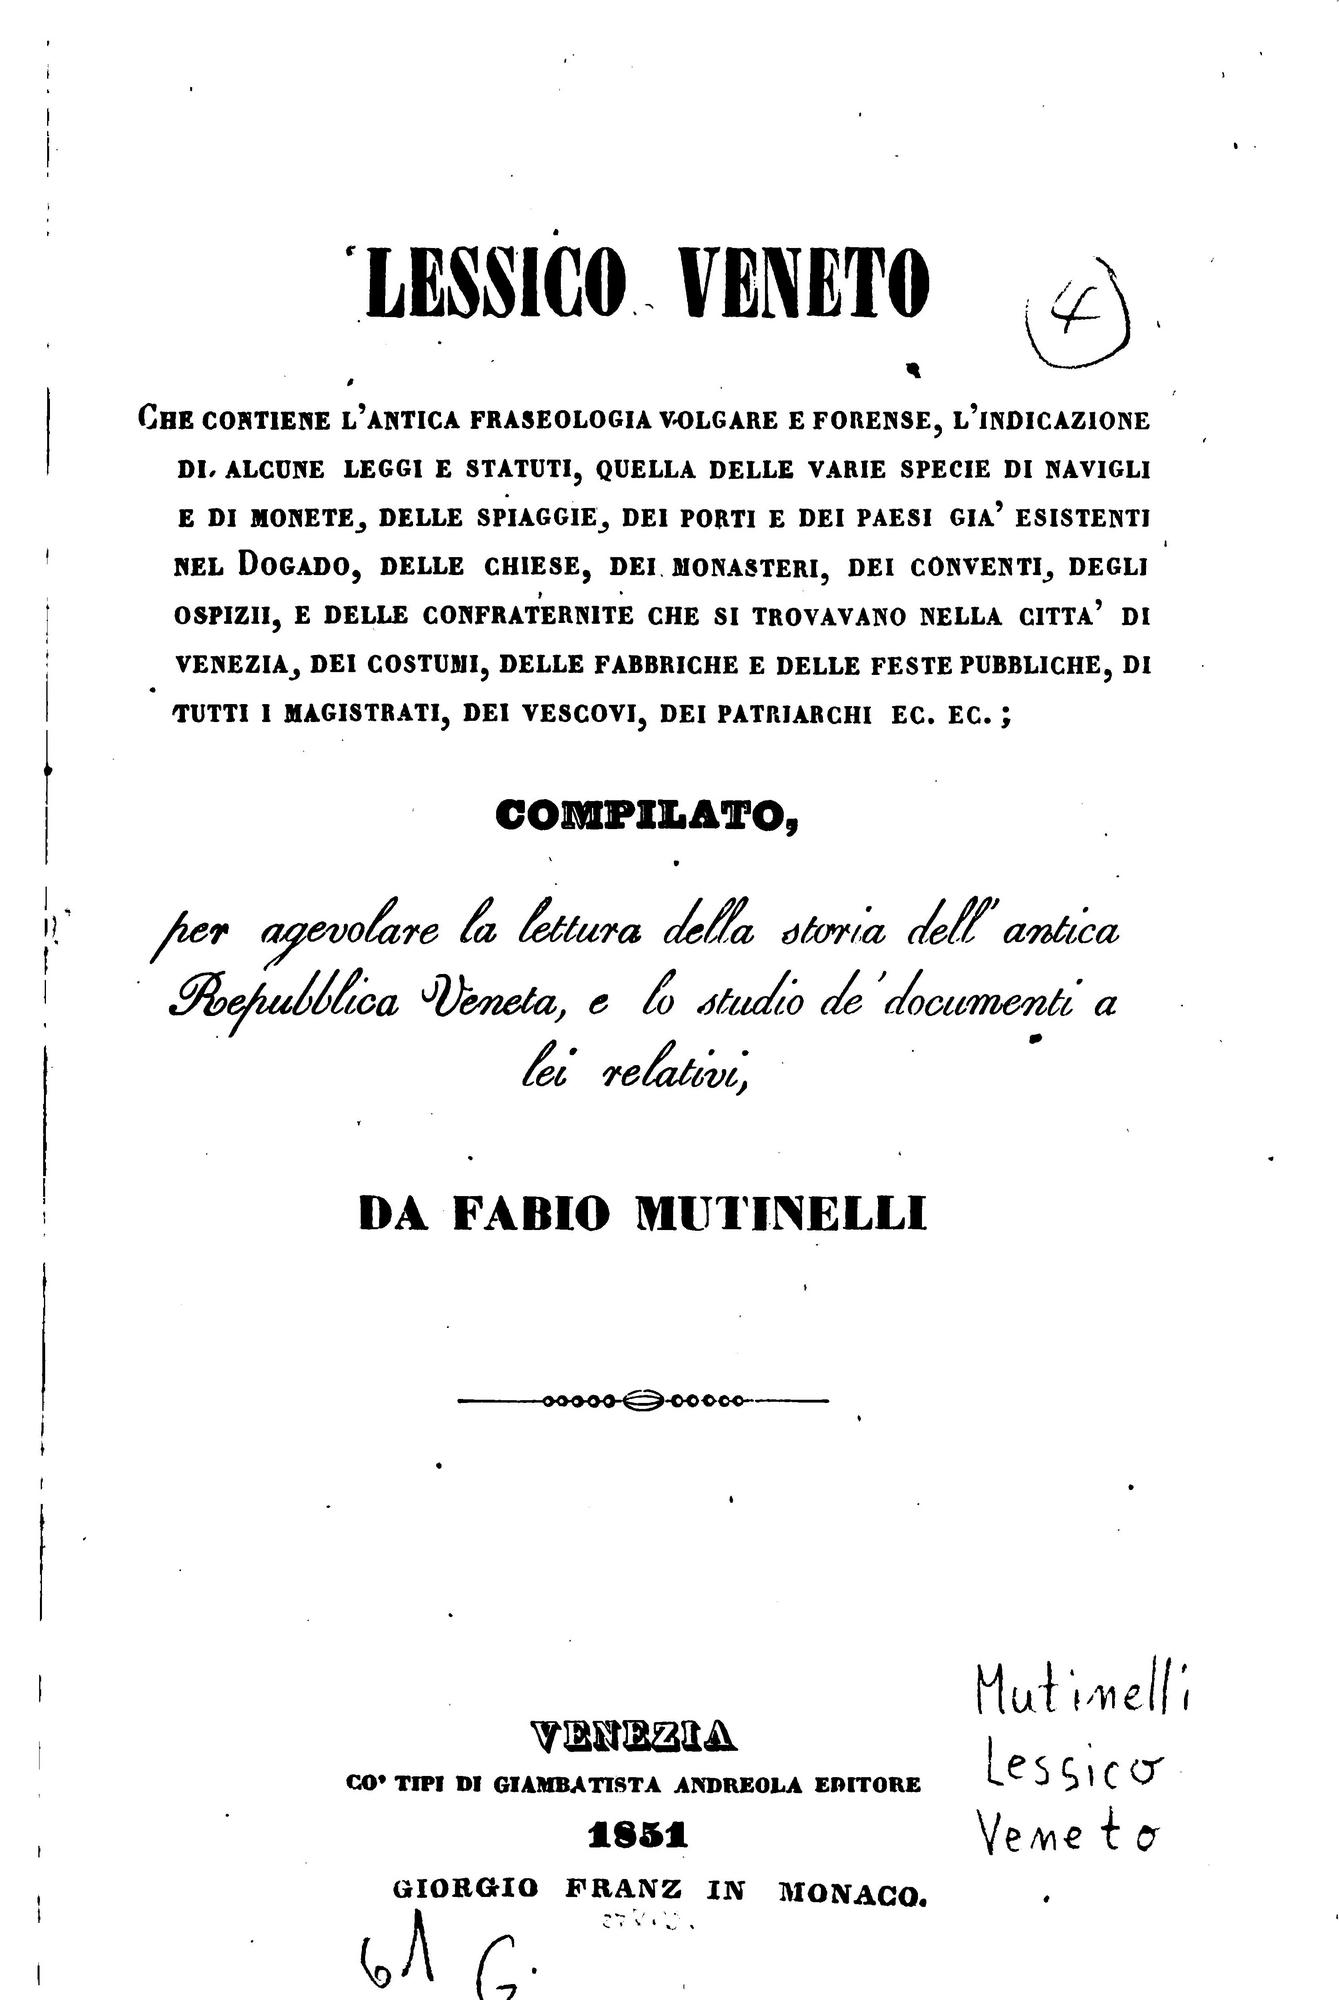 Title page of the "Lessico Veneto" (1851) by Fabio Mutinelli